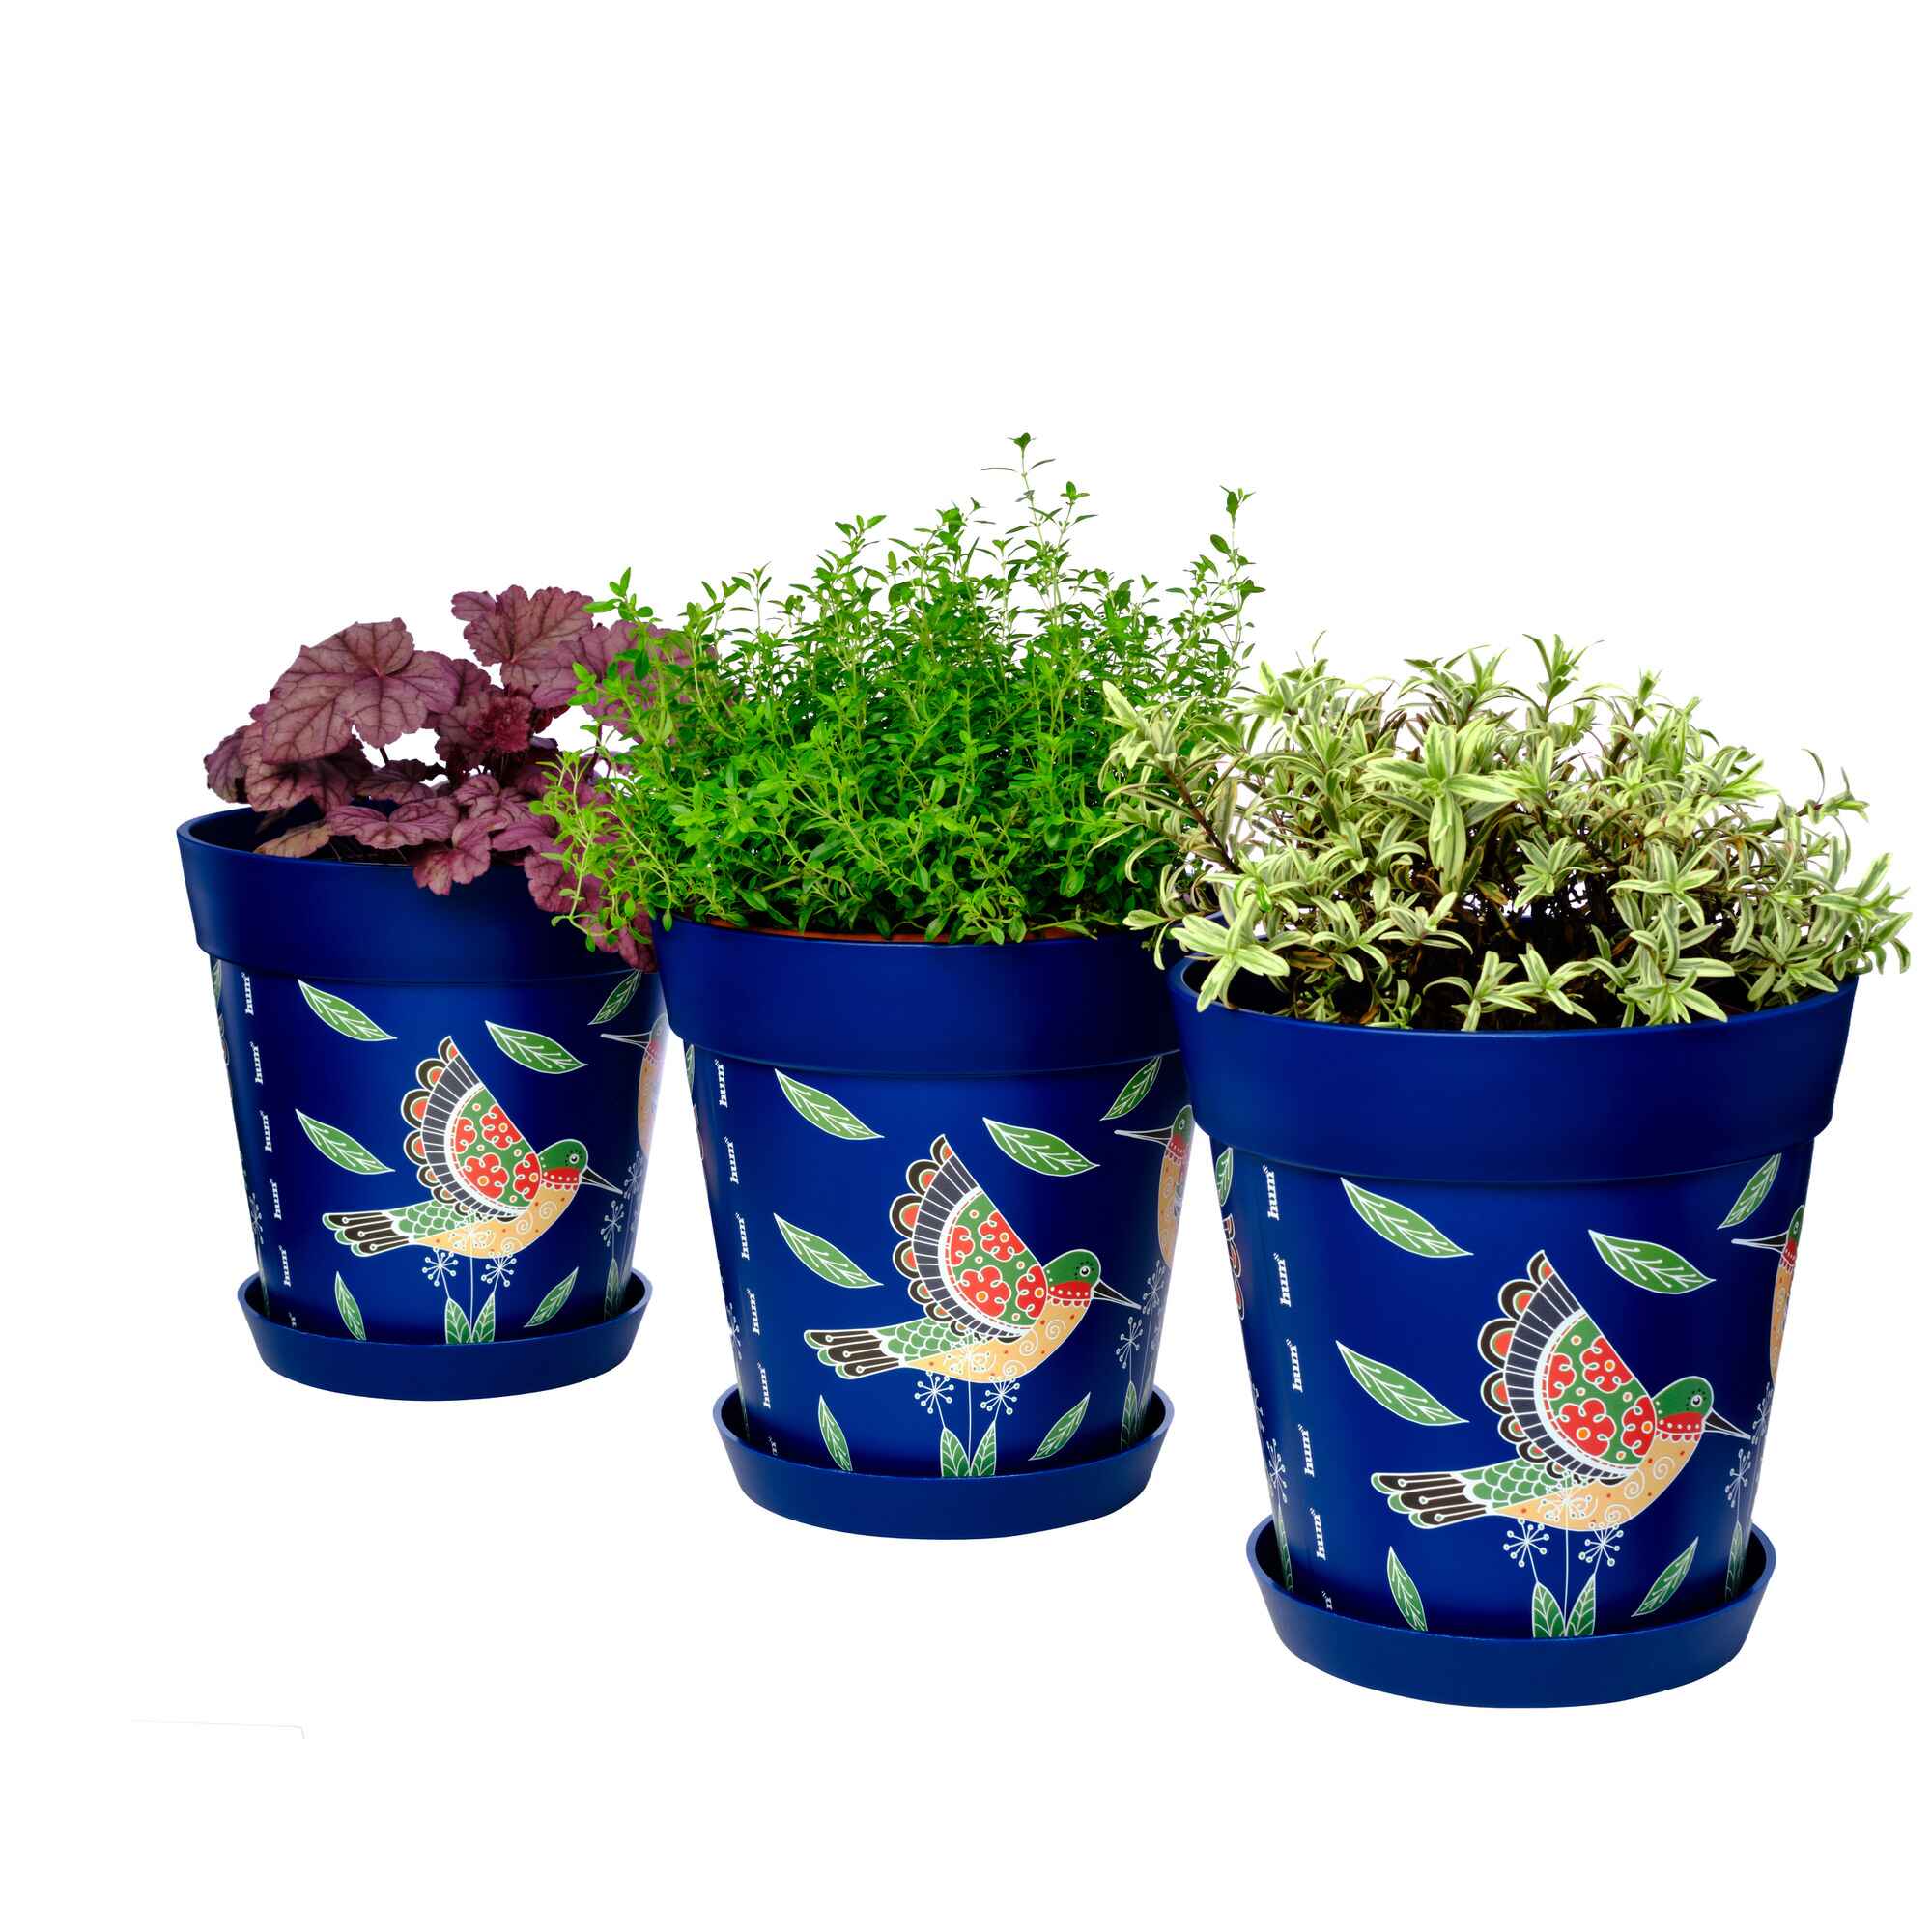 Picture of 3 Planted Medium 22cm Blue Hummingbird Pattern Plastic Indoor/Outdoor Flowerpot and Saucers